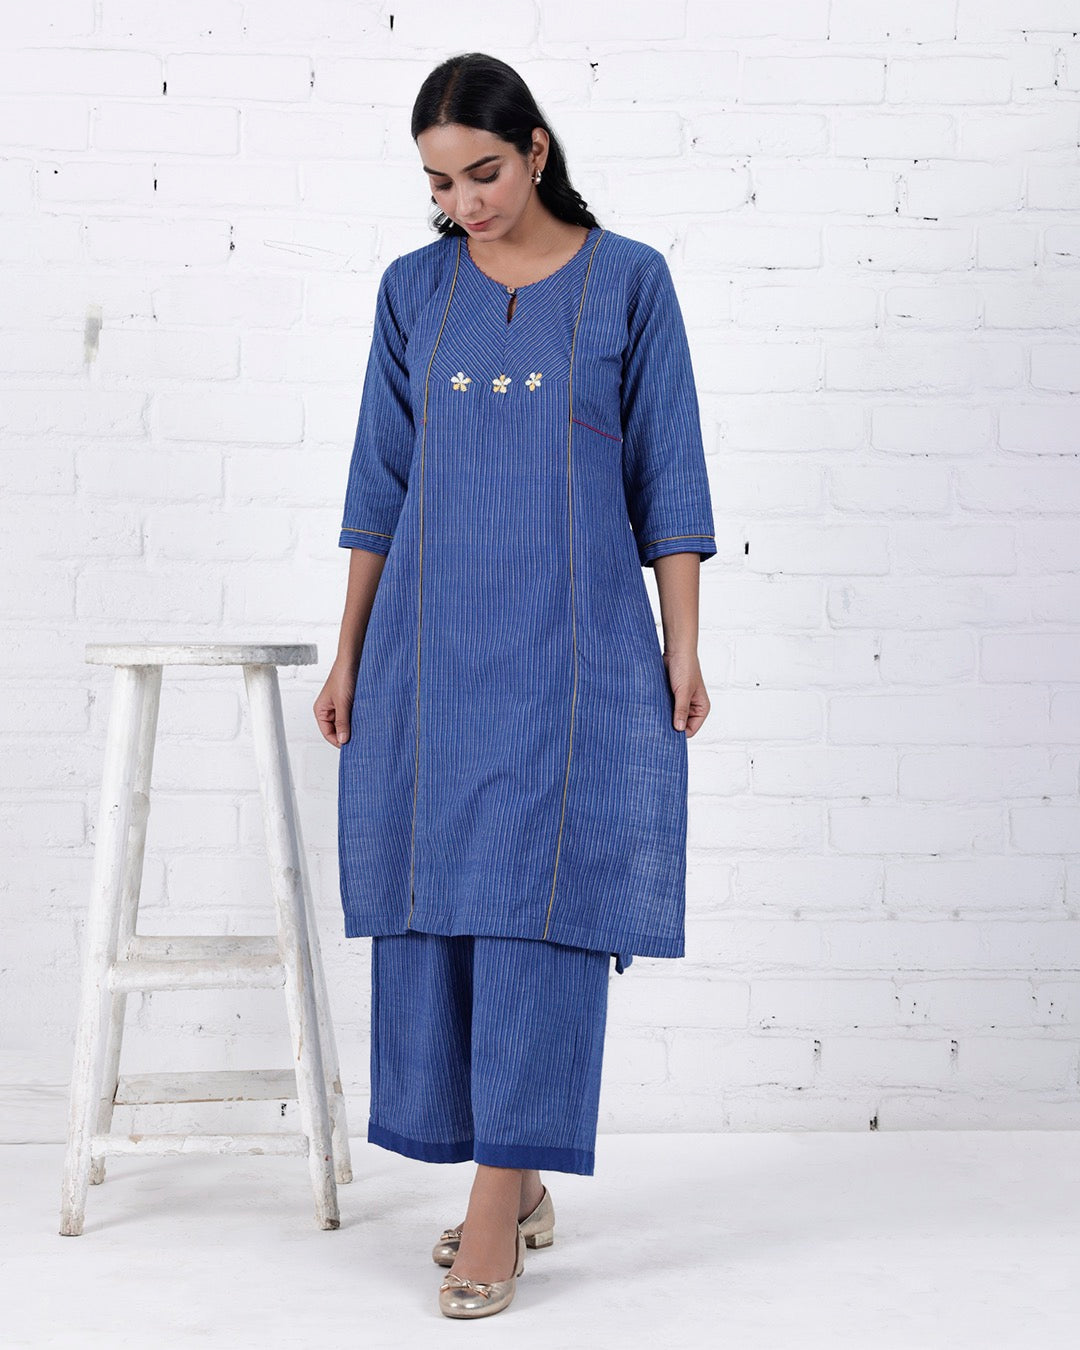 Shop Blue cotton embroidered Kurta Set online at bebaakstudio.com